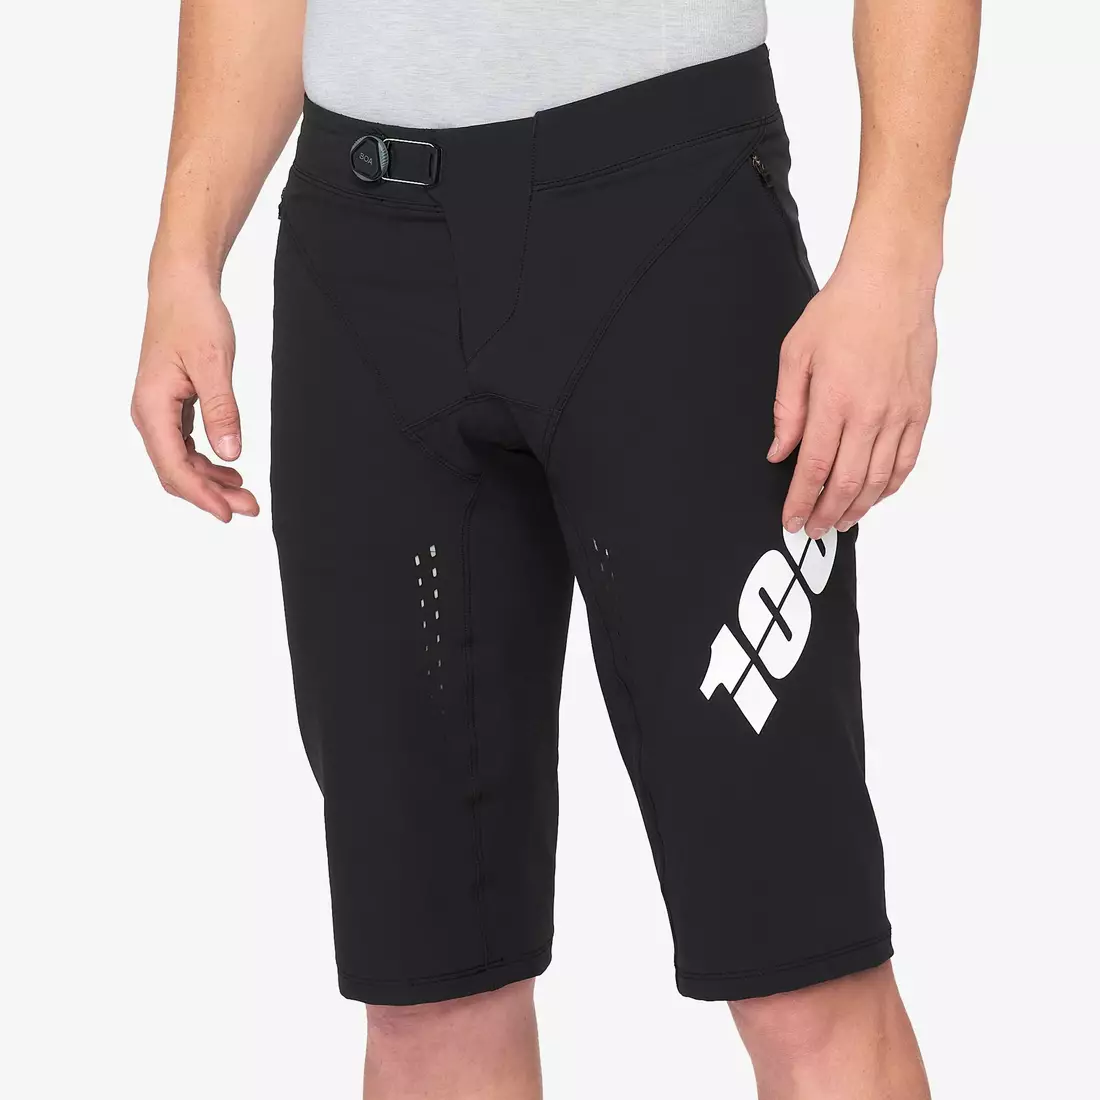 100% men's cycling shorts R-CORE X black STO-42003-001-28